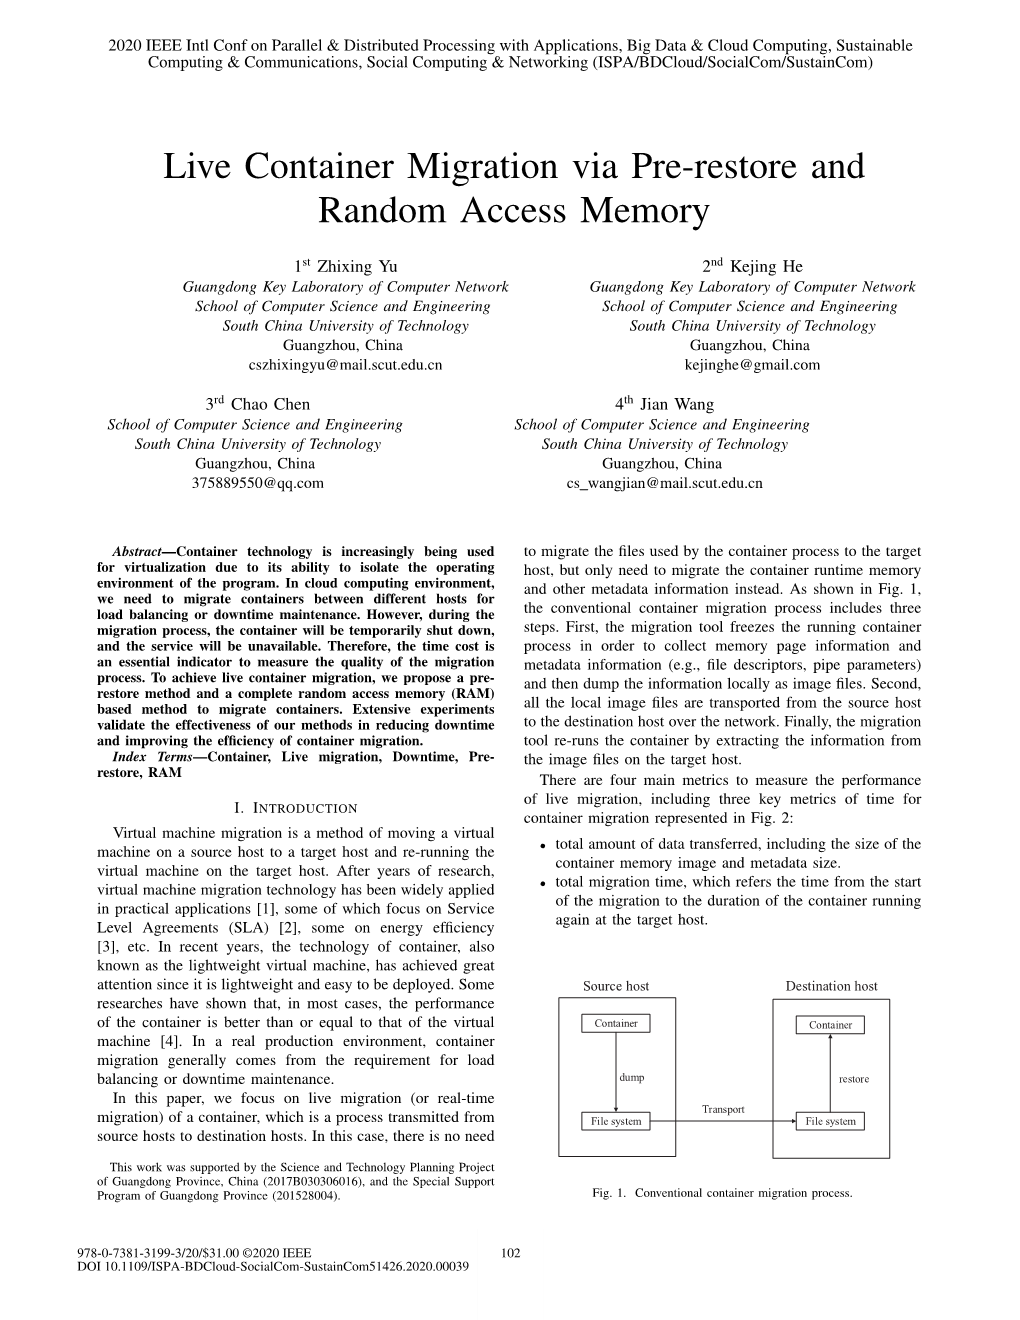 Live Container Migration Via Pre-Restore and Random Access Memory